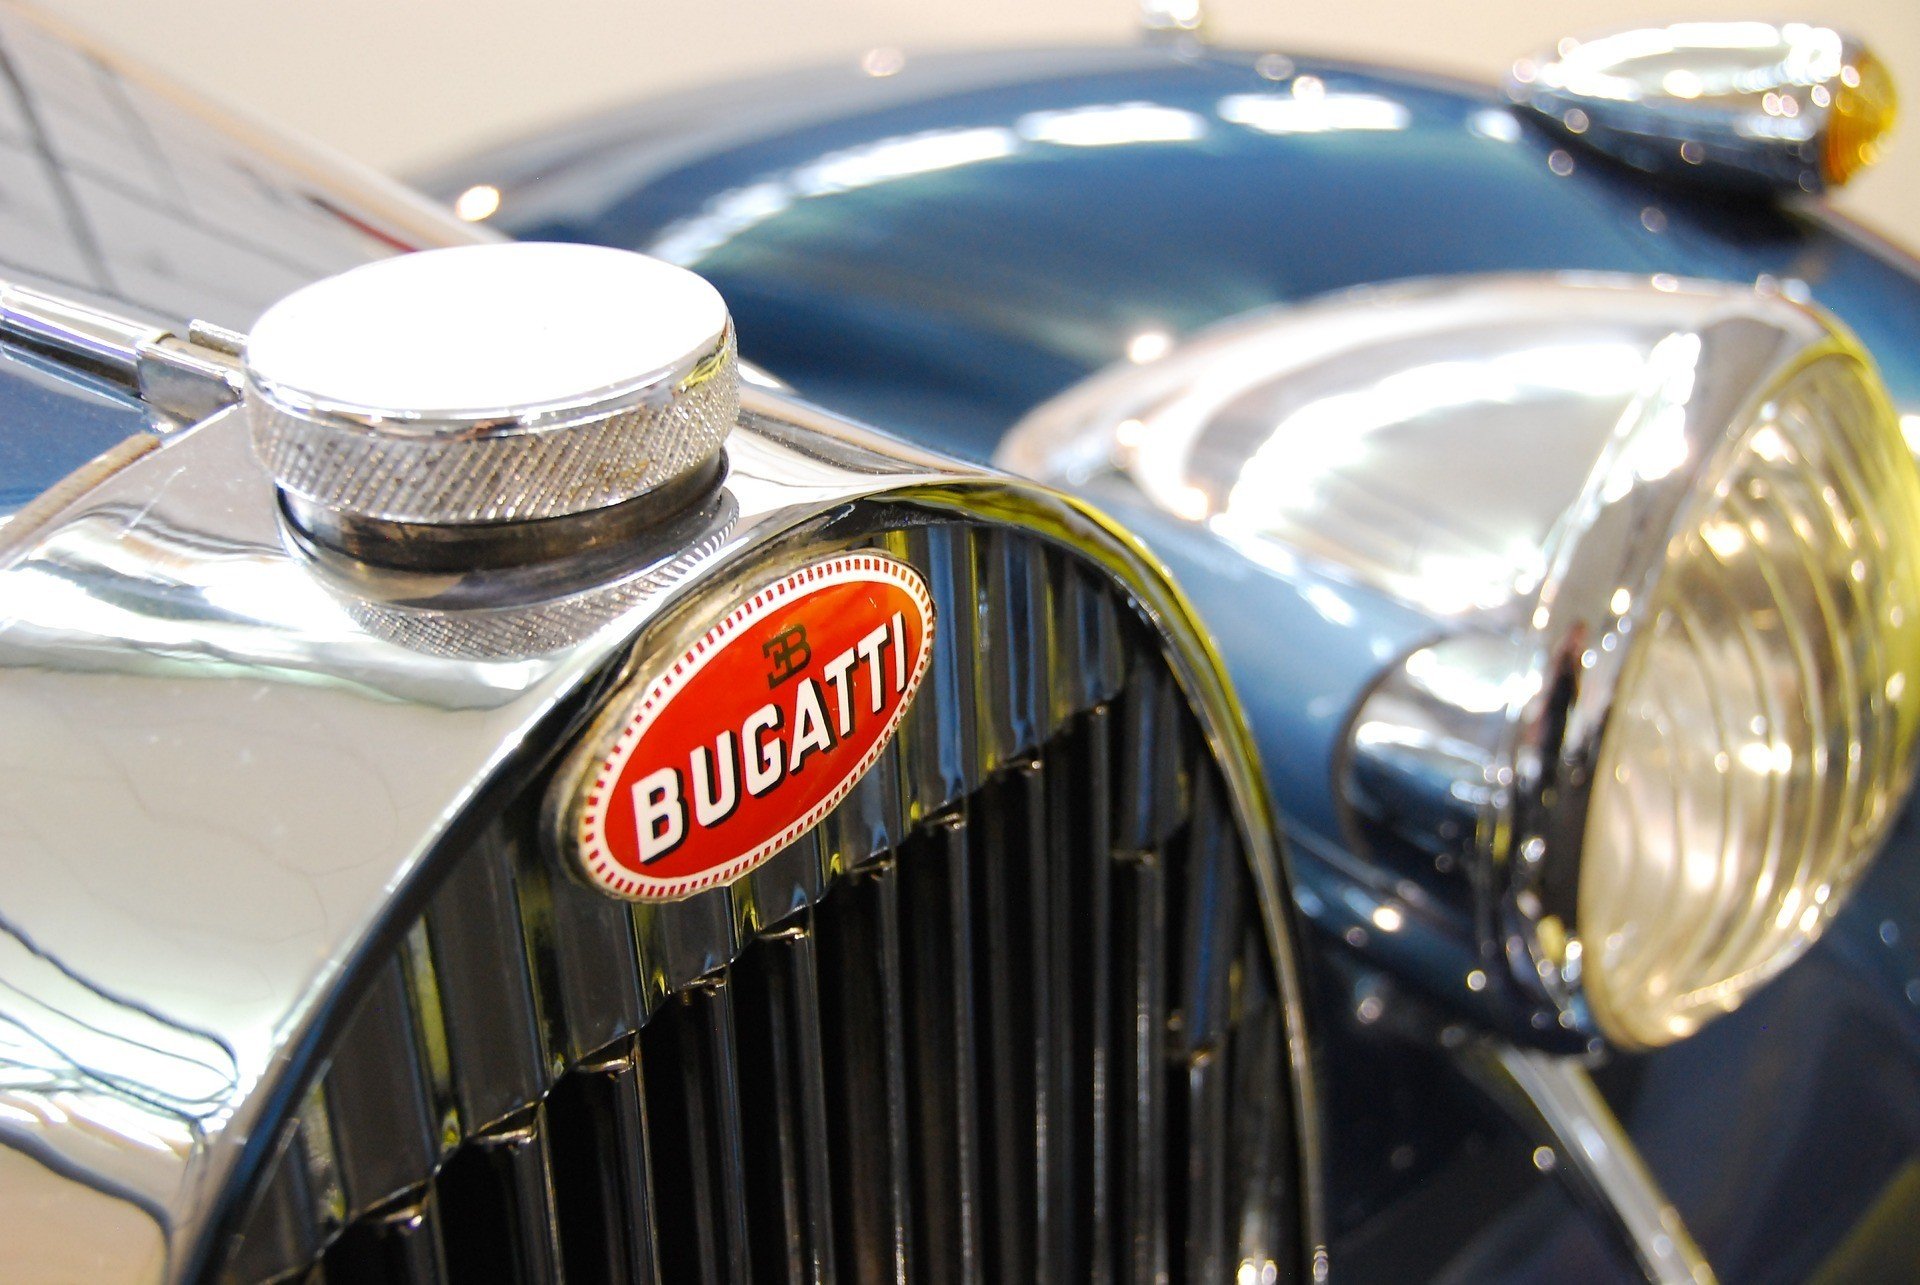 Bugatti презентовала новый гиперкар